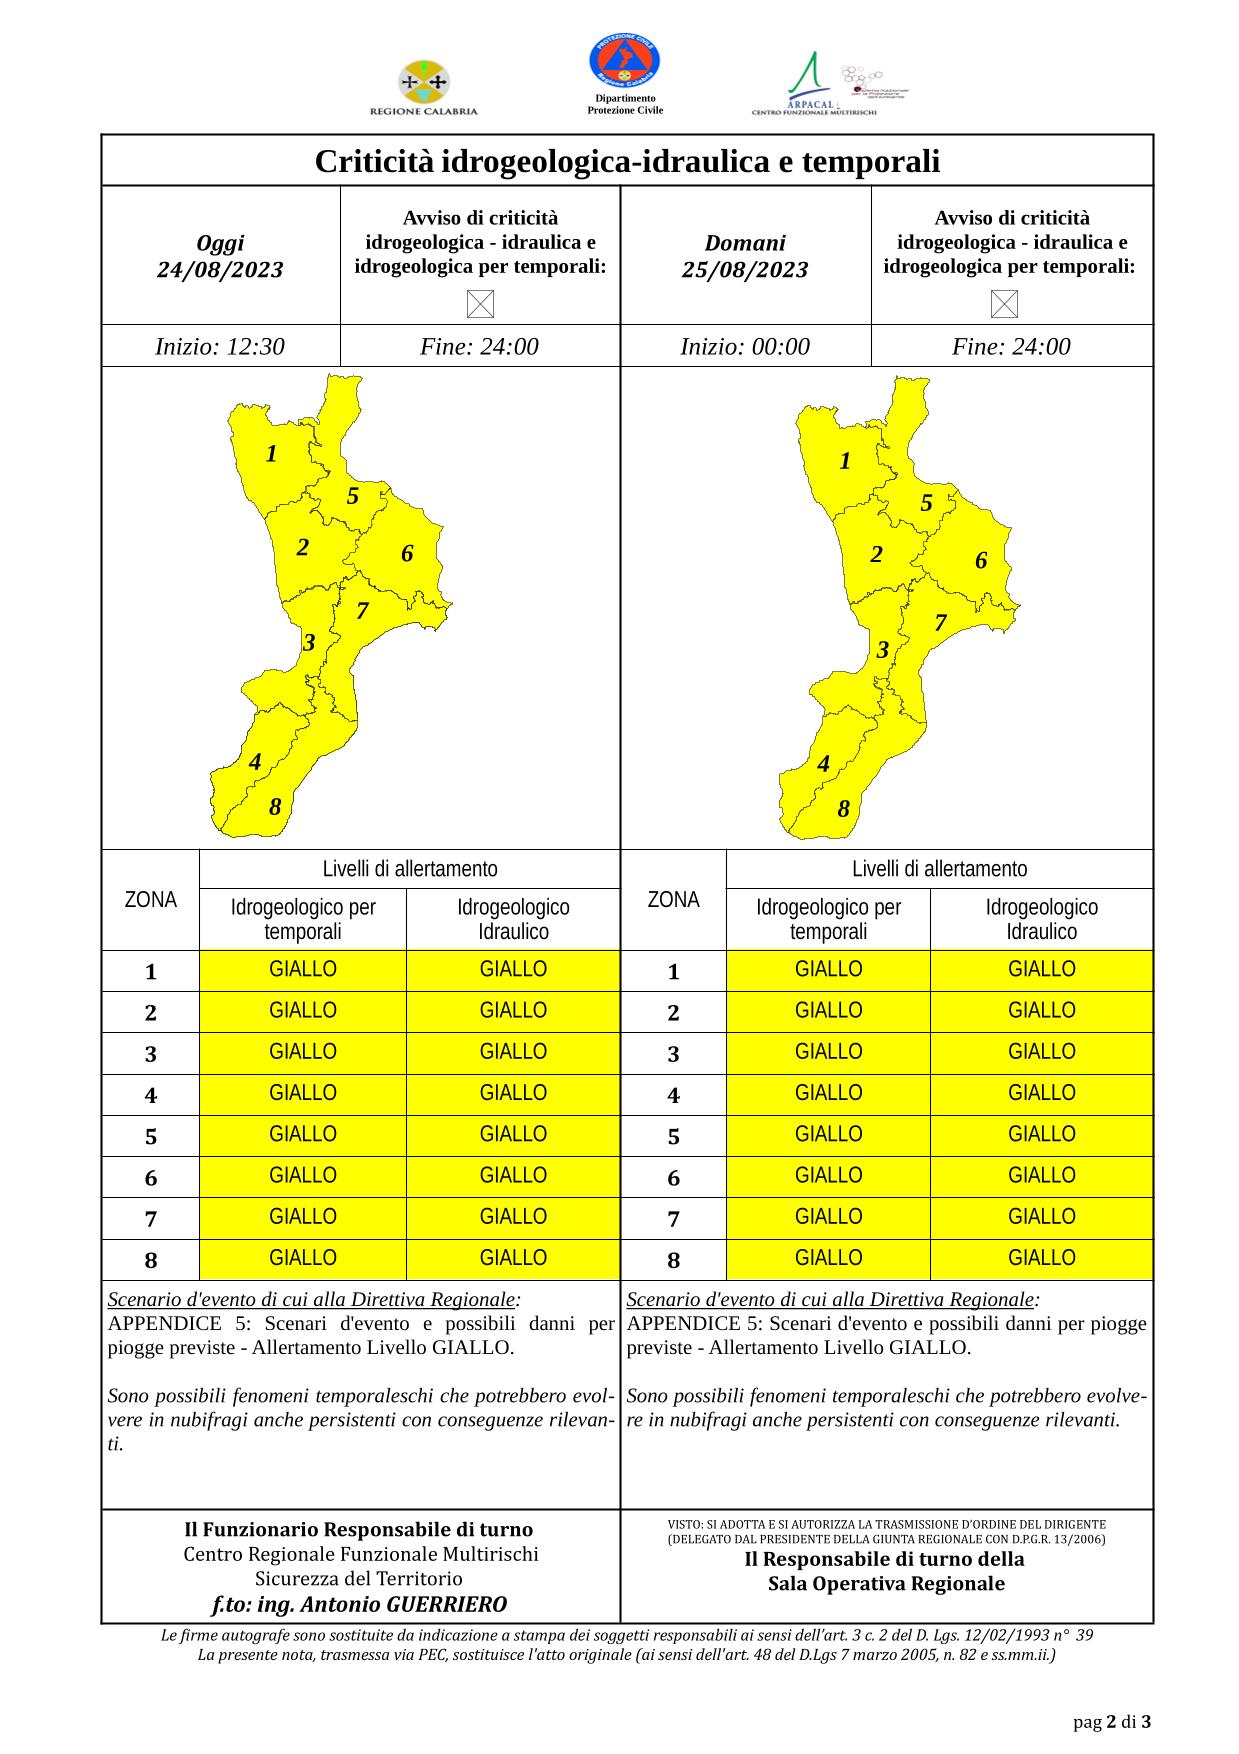 Criticità idrogeologica-idraulica e temporali in Calabria 24-08-2023